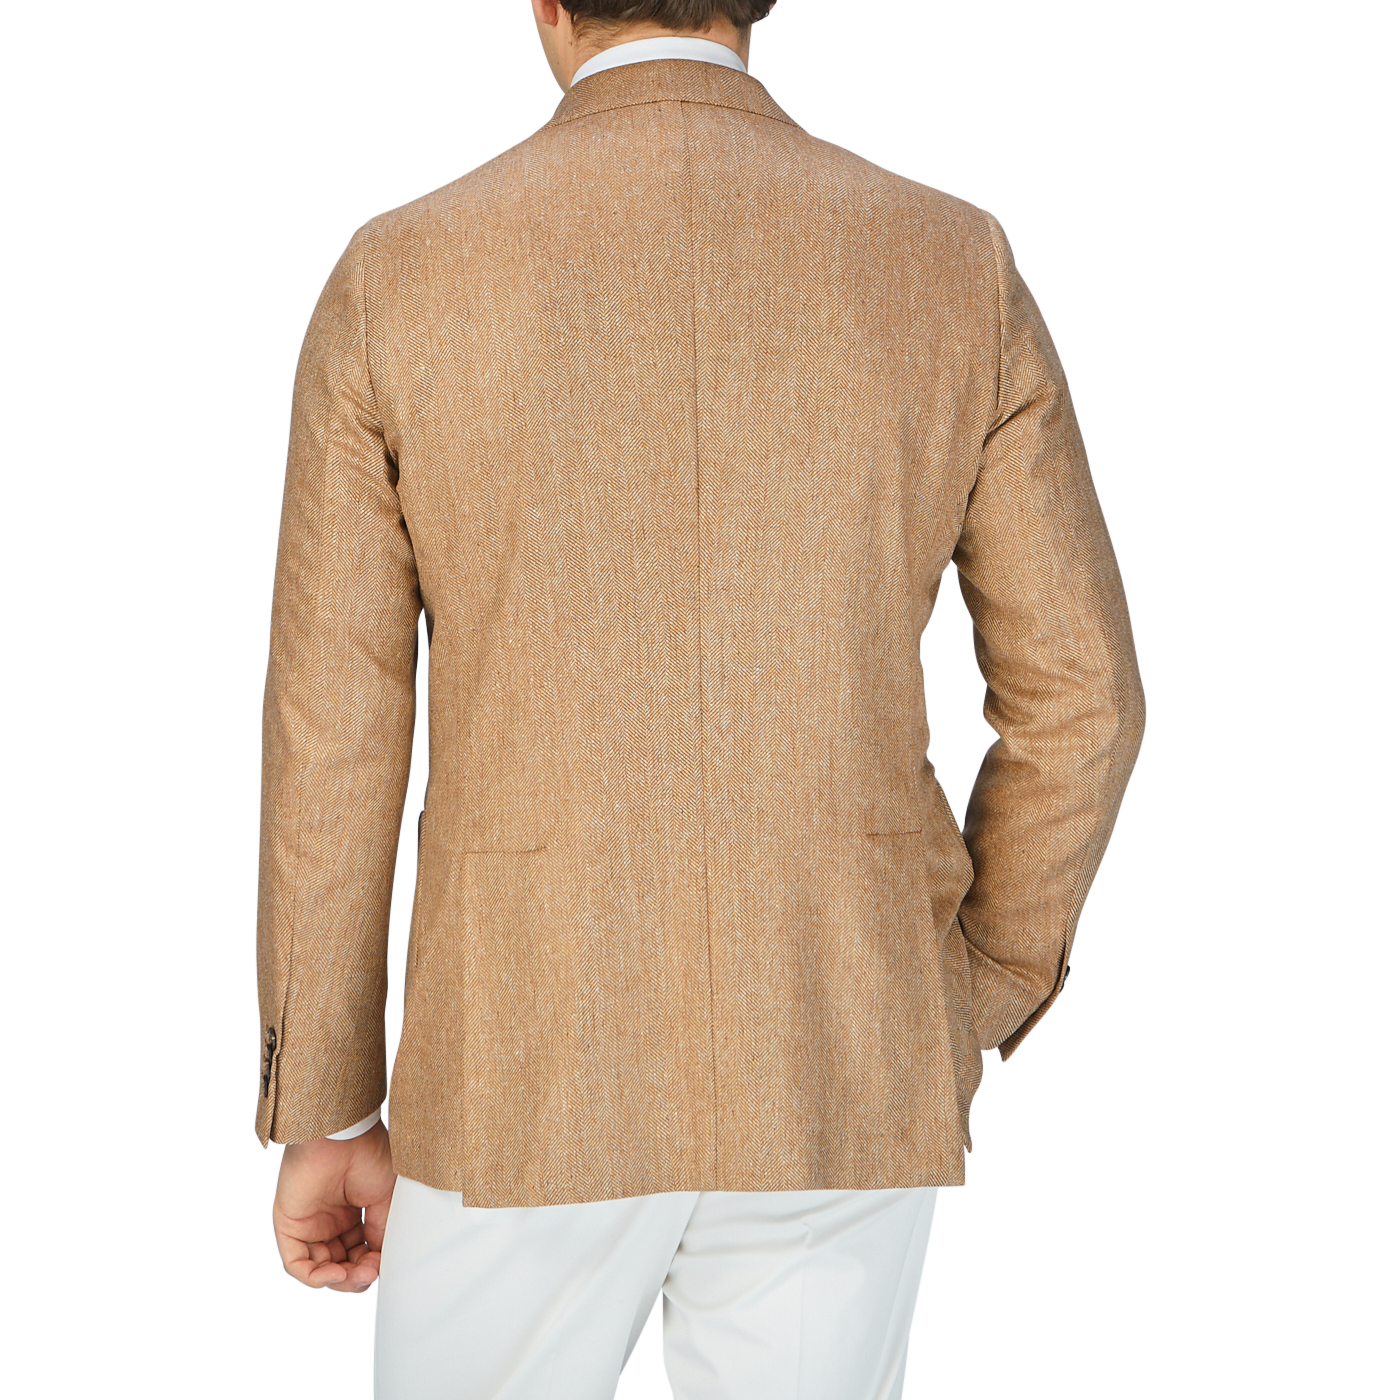 The back view of a man wearing a Studio 73 Camel Brown Herringbone Pure Silk Blazer.